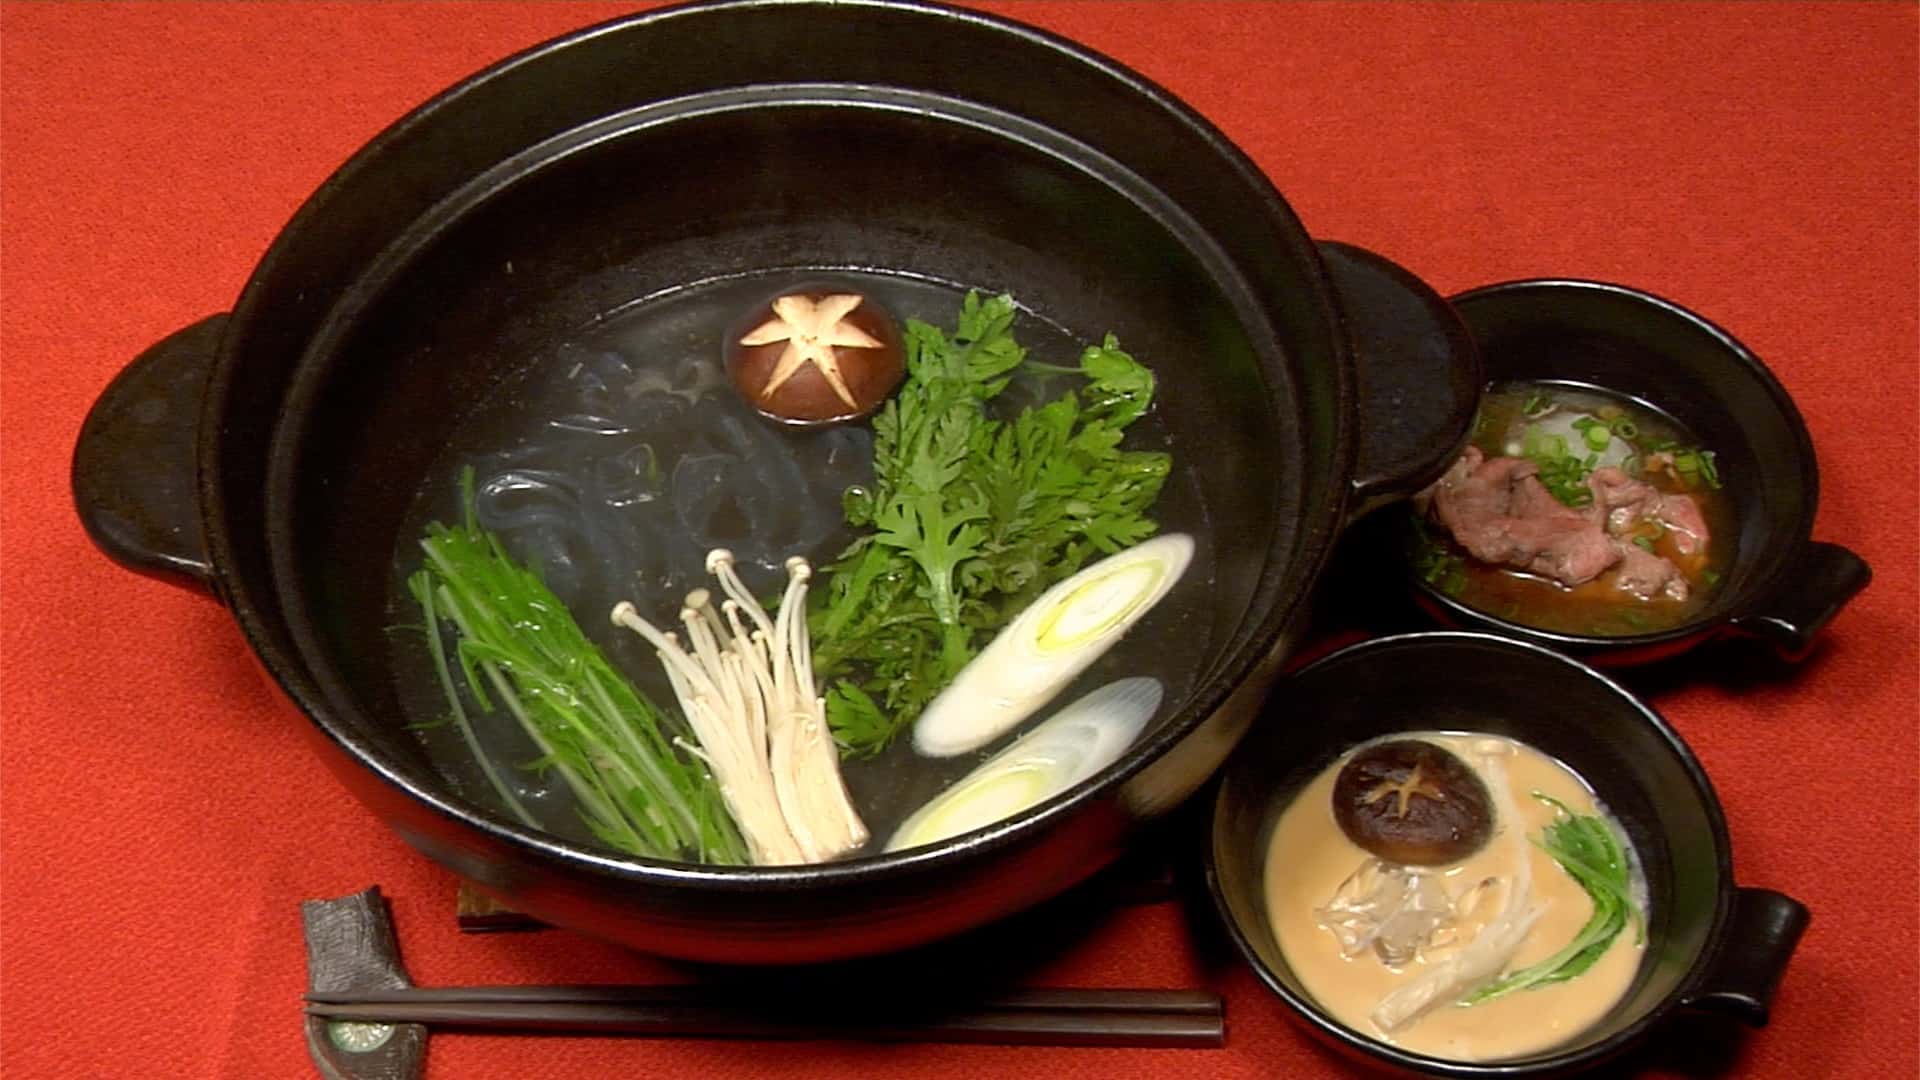 How to Use Shabu Shabu Hot Pots - Globalkitchen Japan